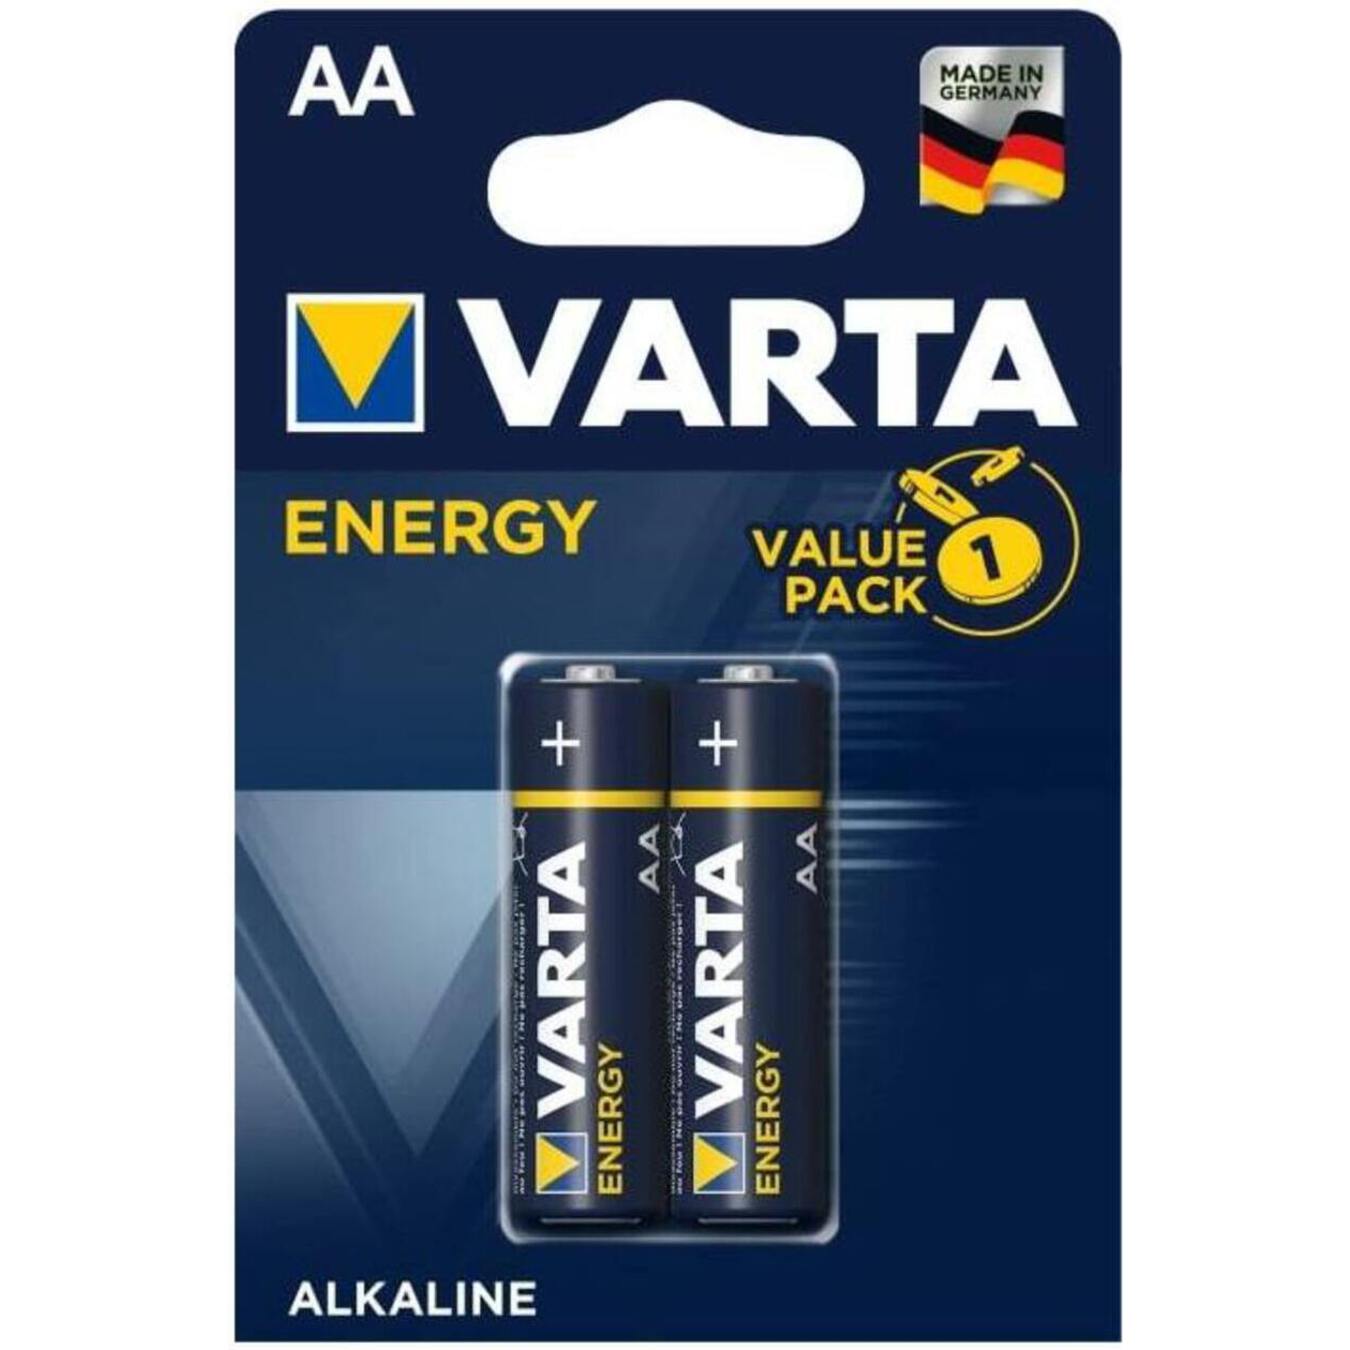 VARTA Energy AA BLI 2 battery